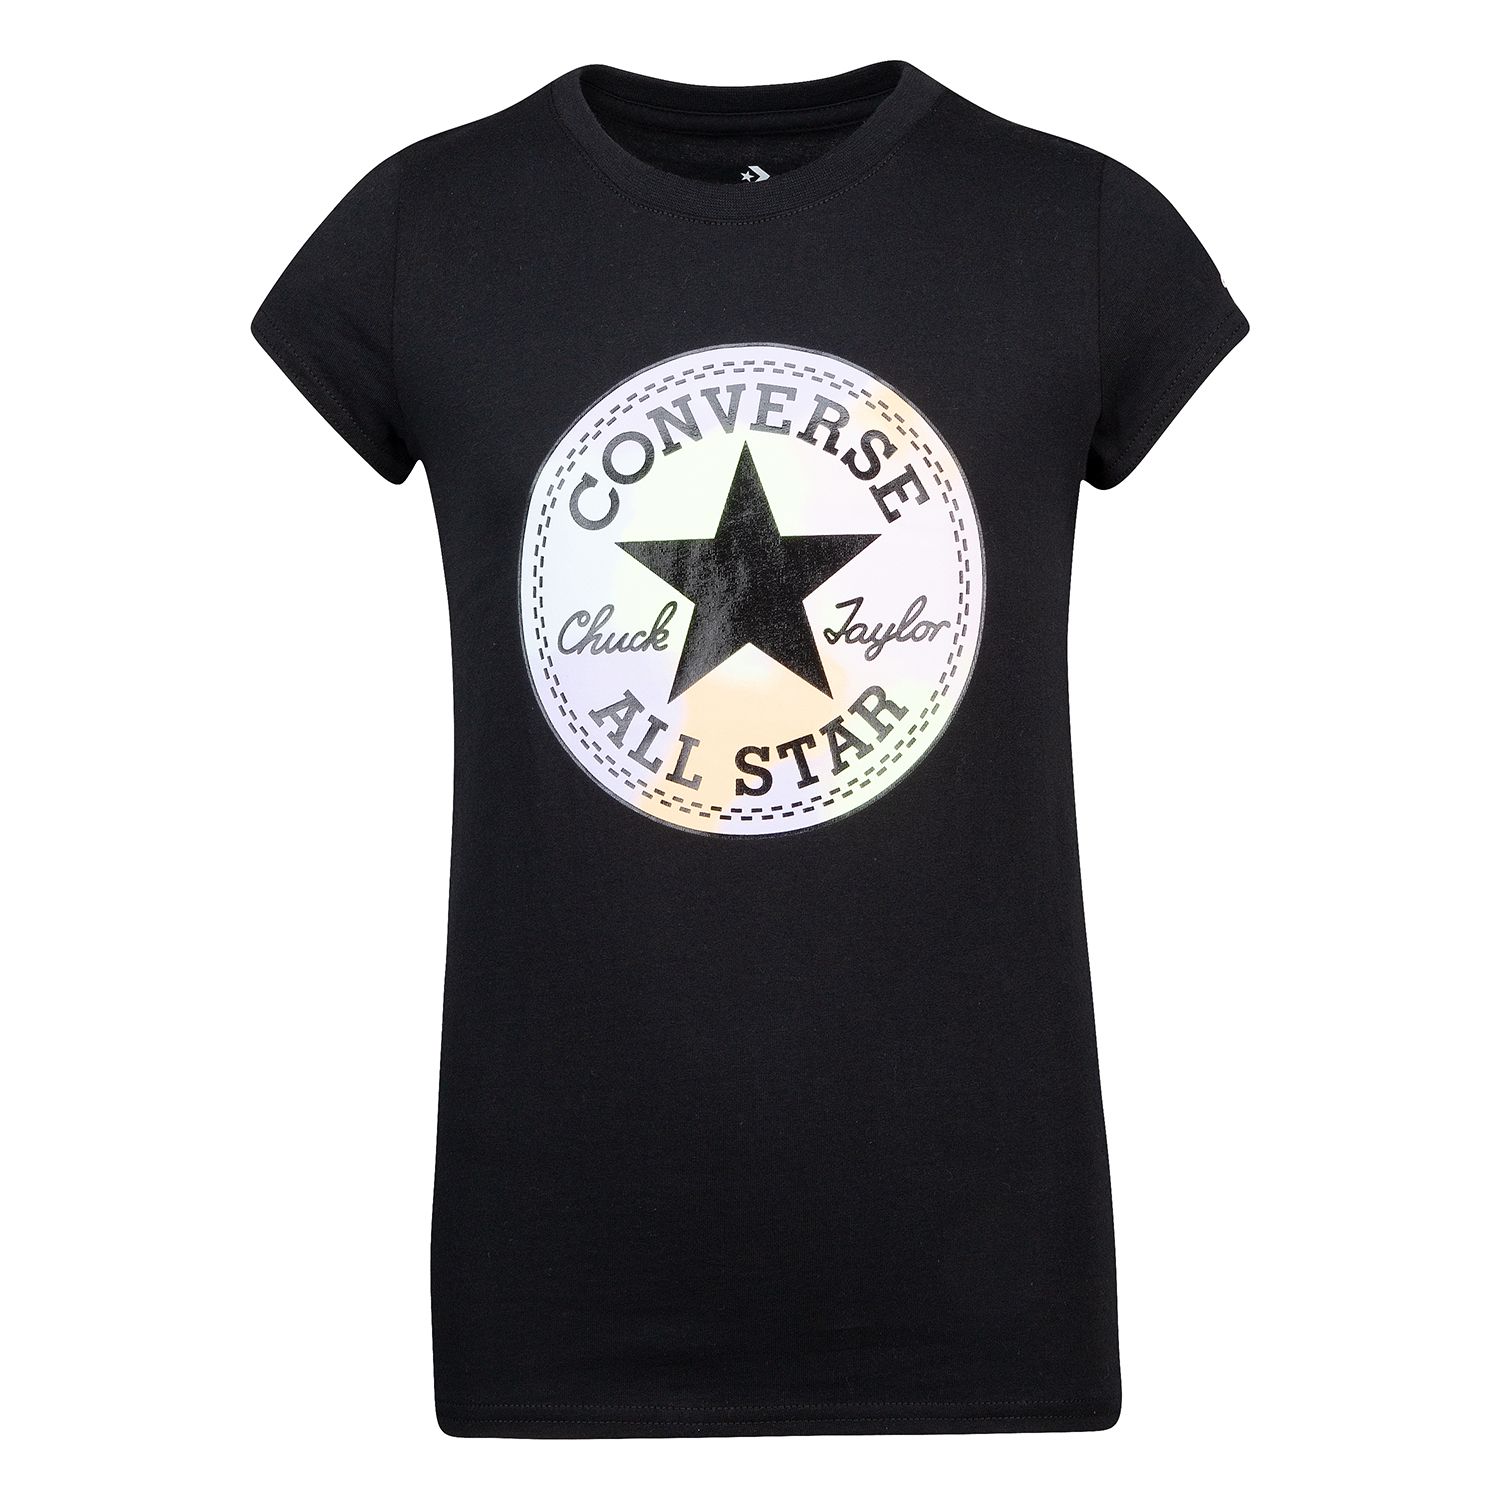 Converse Clothing | Kohl's